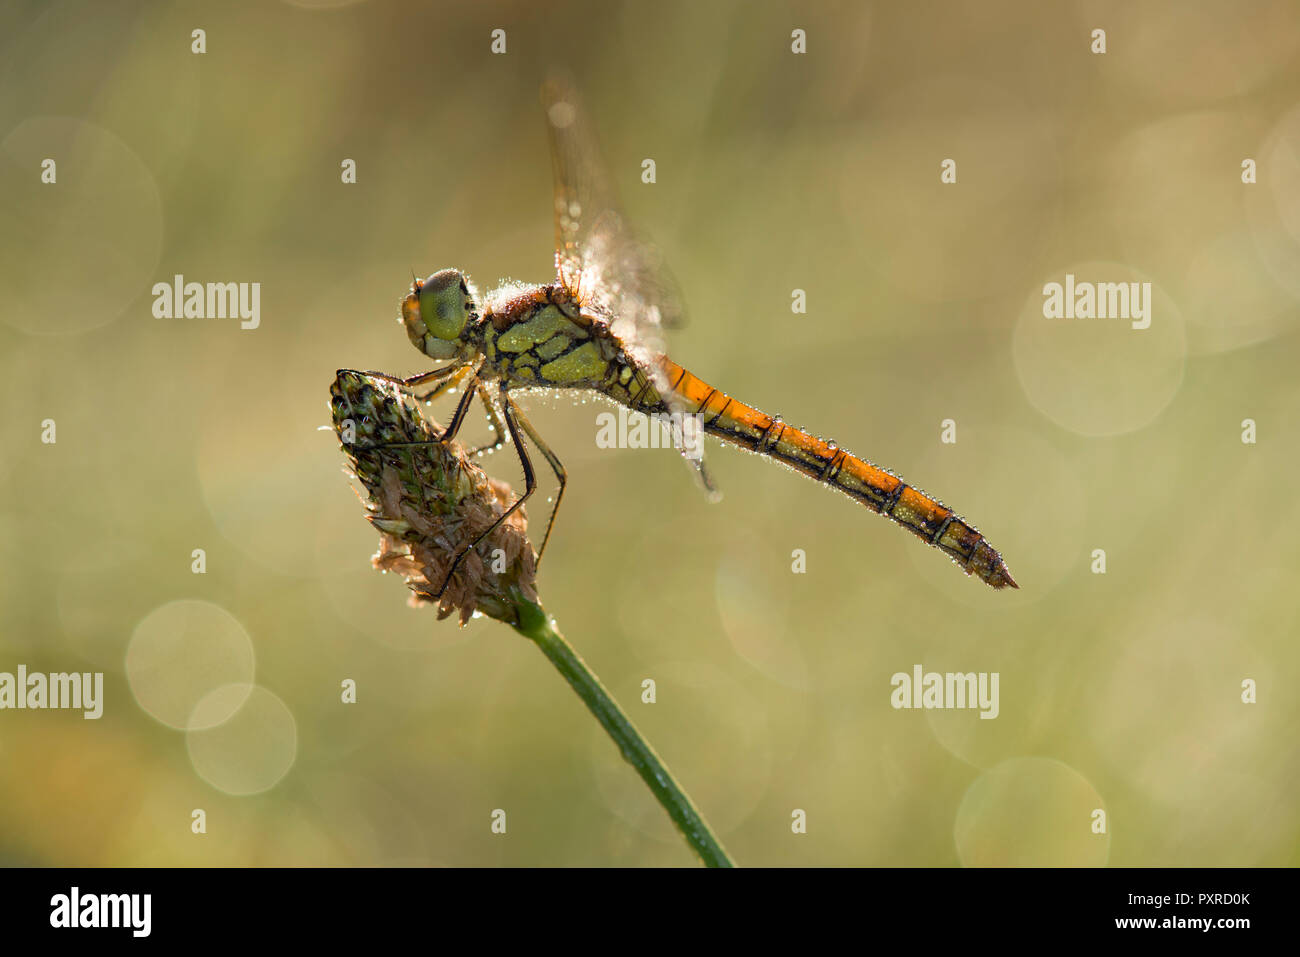 Common darter firefly, Sympetrum striolatum, hovering over flower Stock Photo